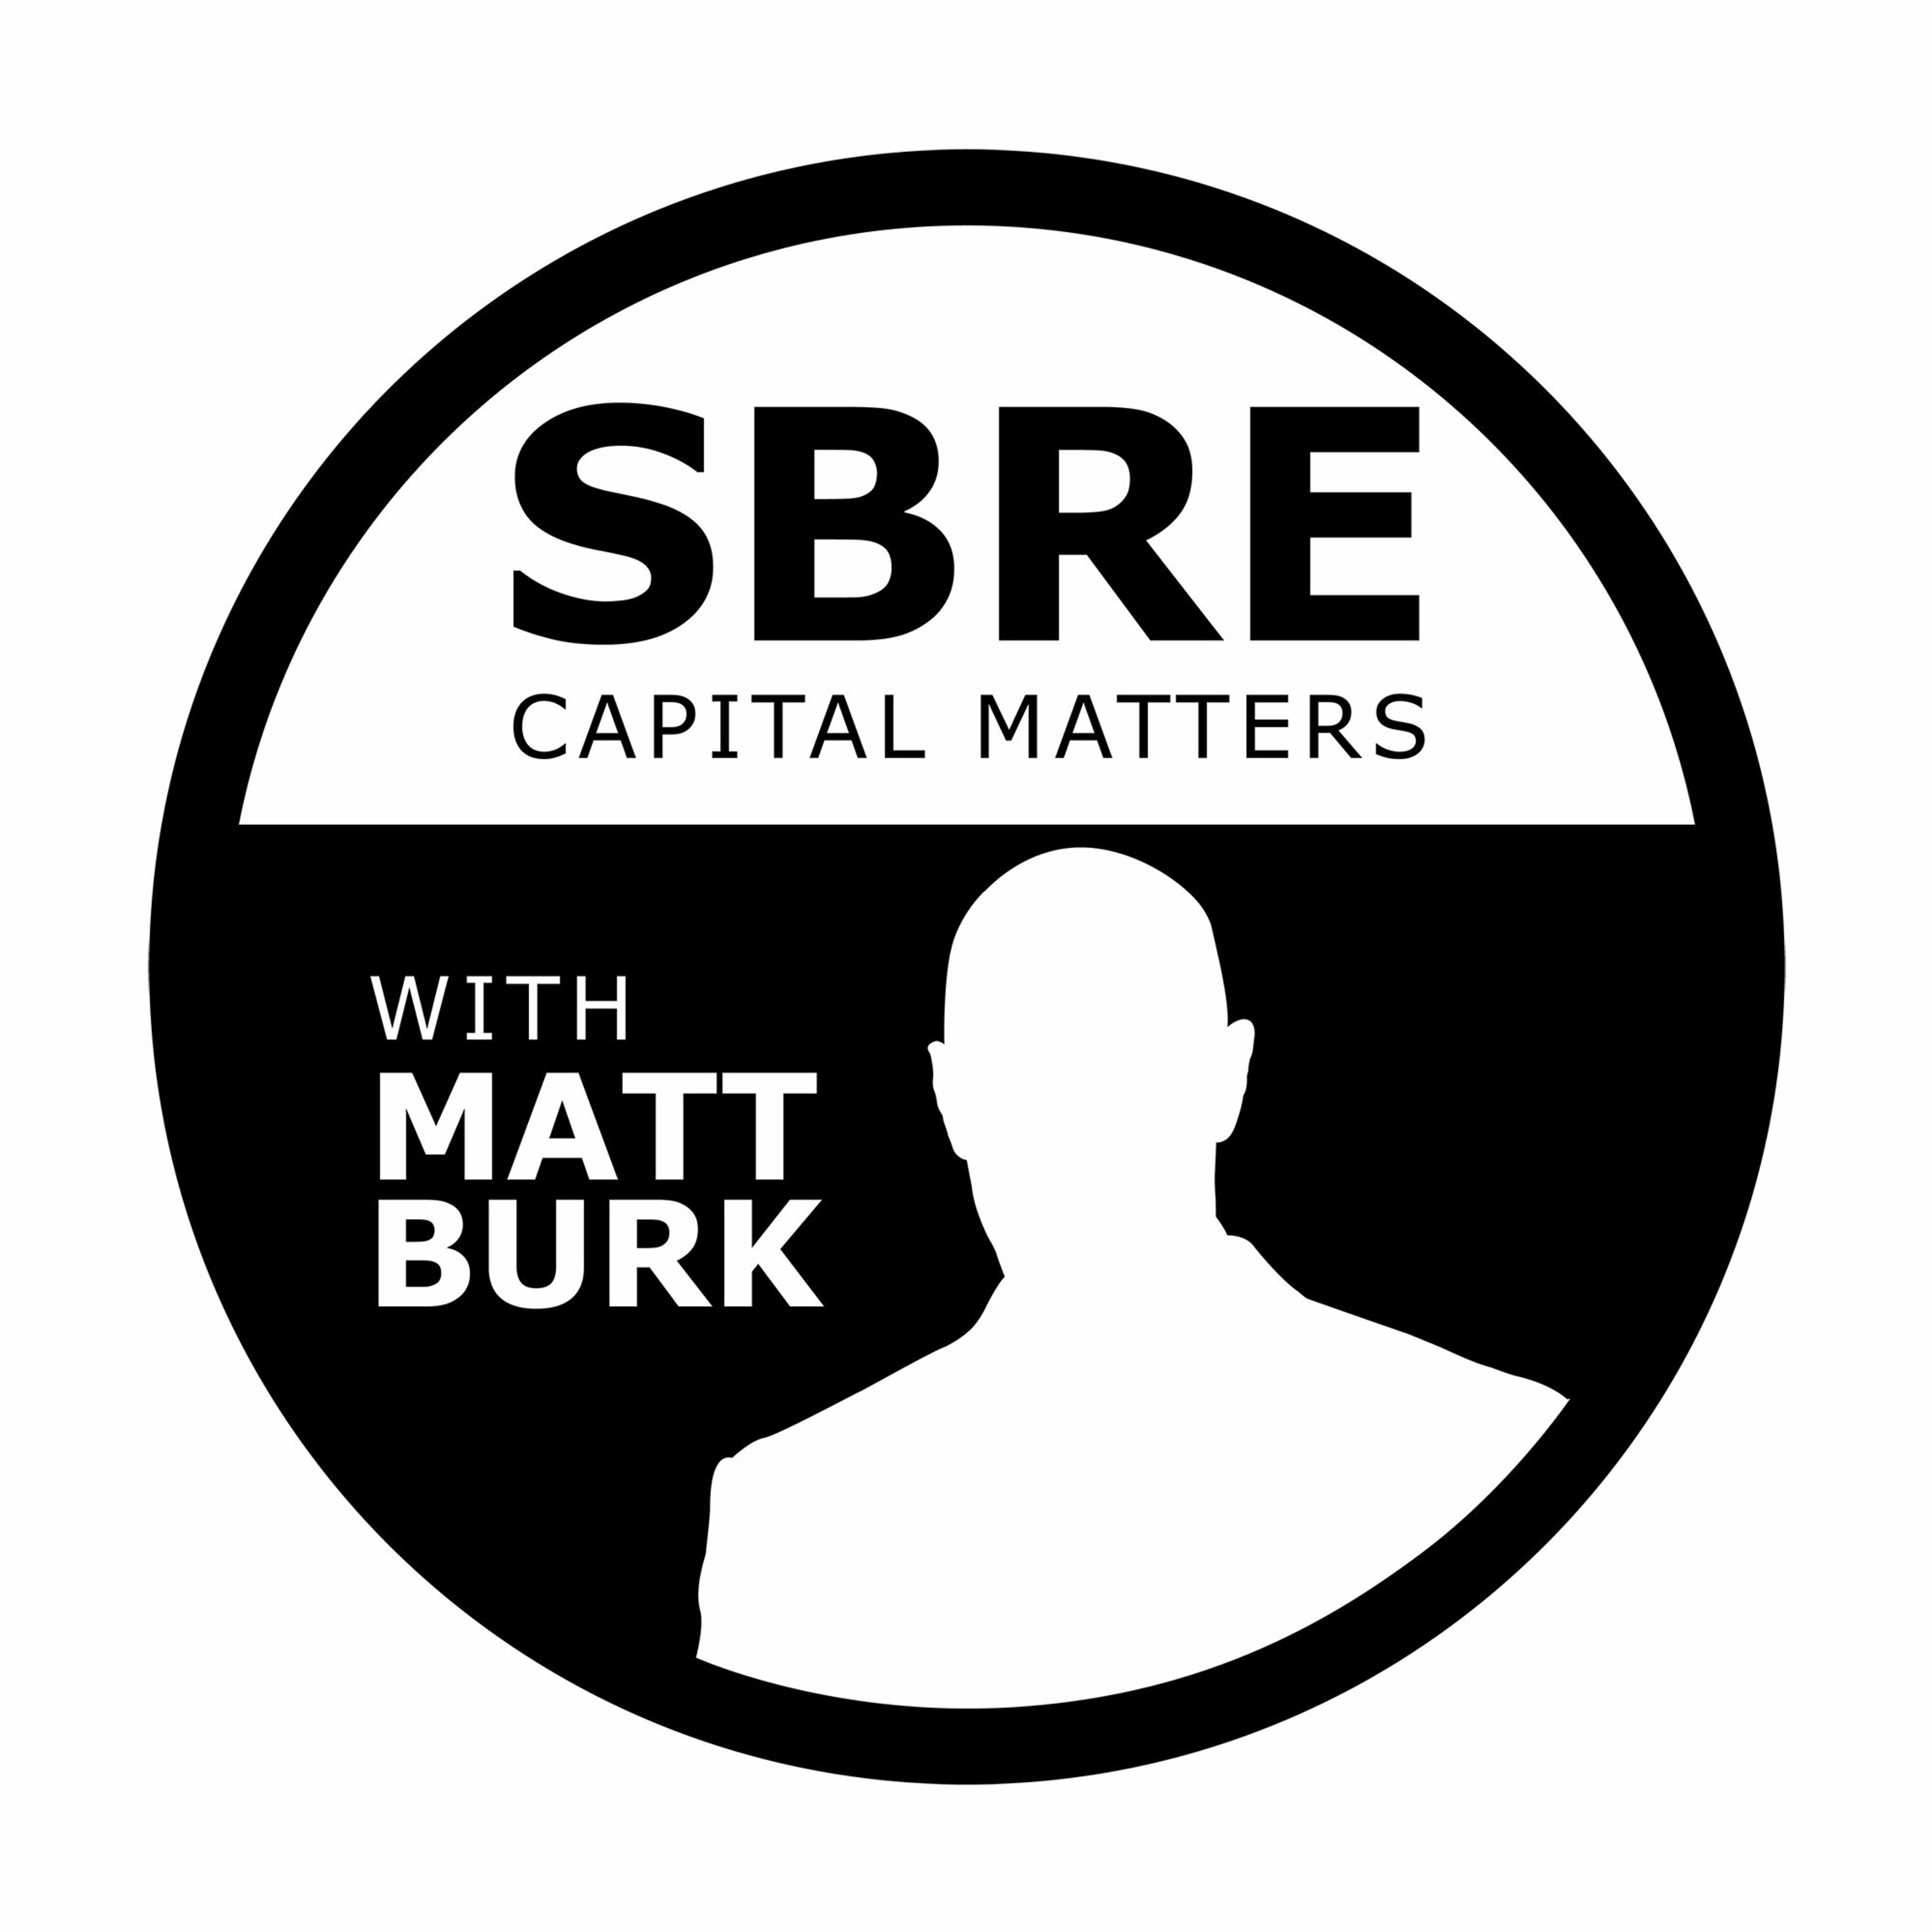 SBRE Capital Matters With Matt Burk SHOW #12 1/31/18